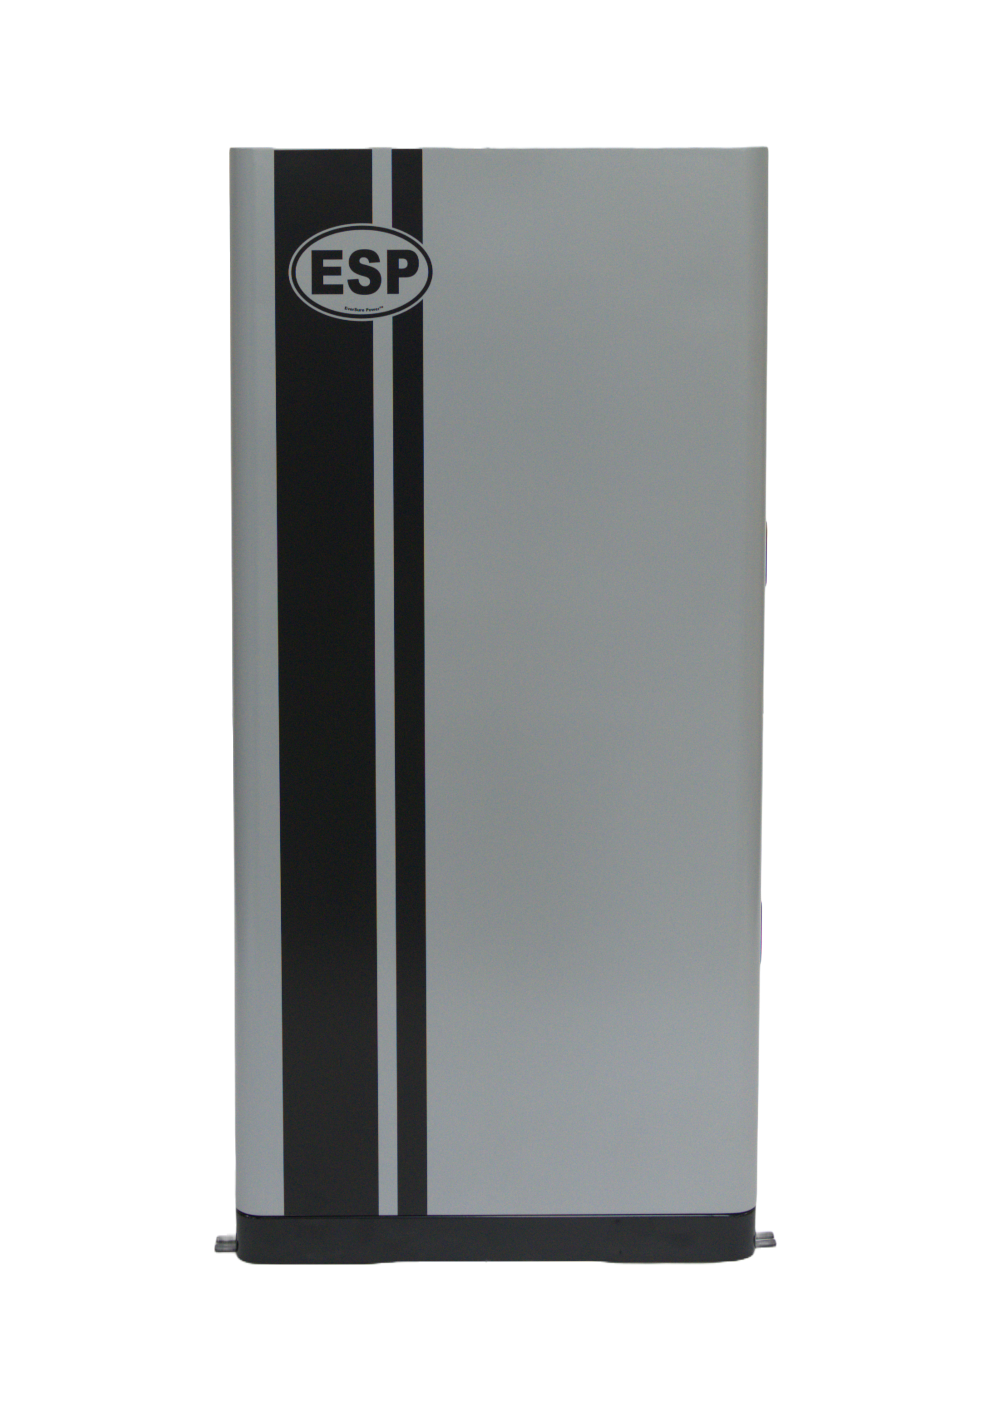 Endurenergy E00020 Battery Enclosure With Bms For 4 ESP-5100